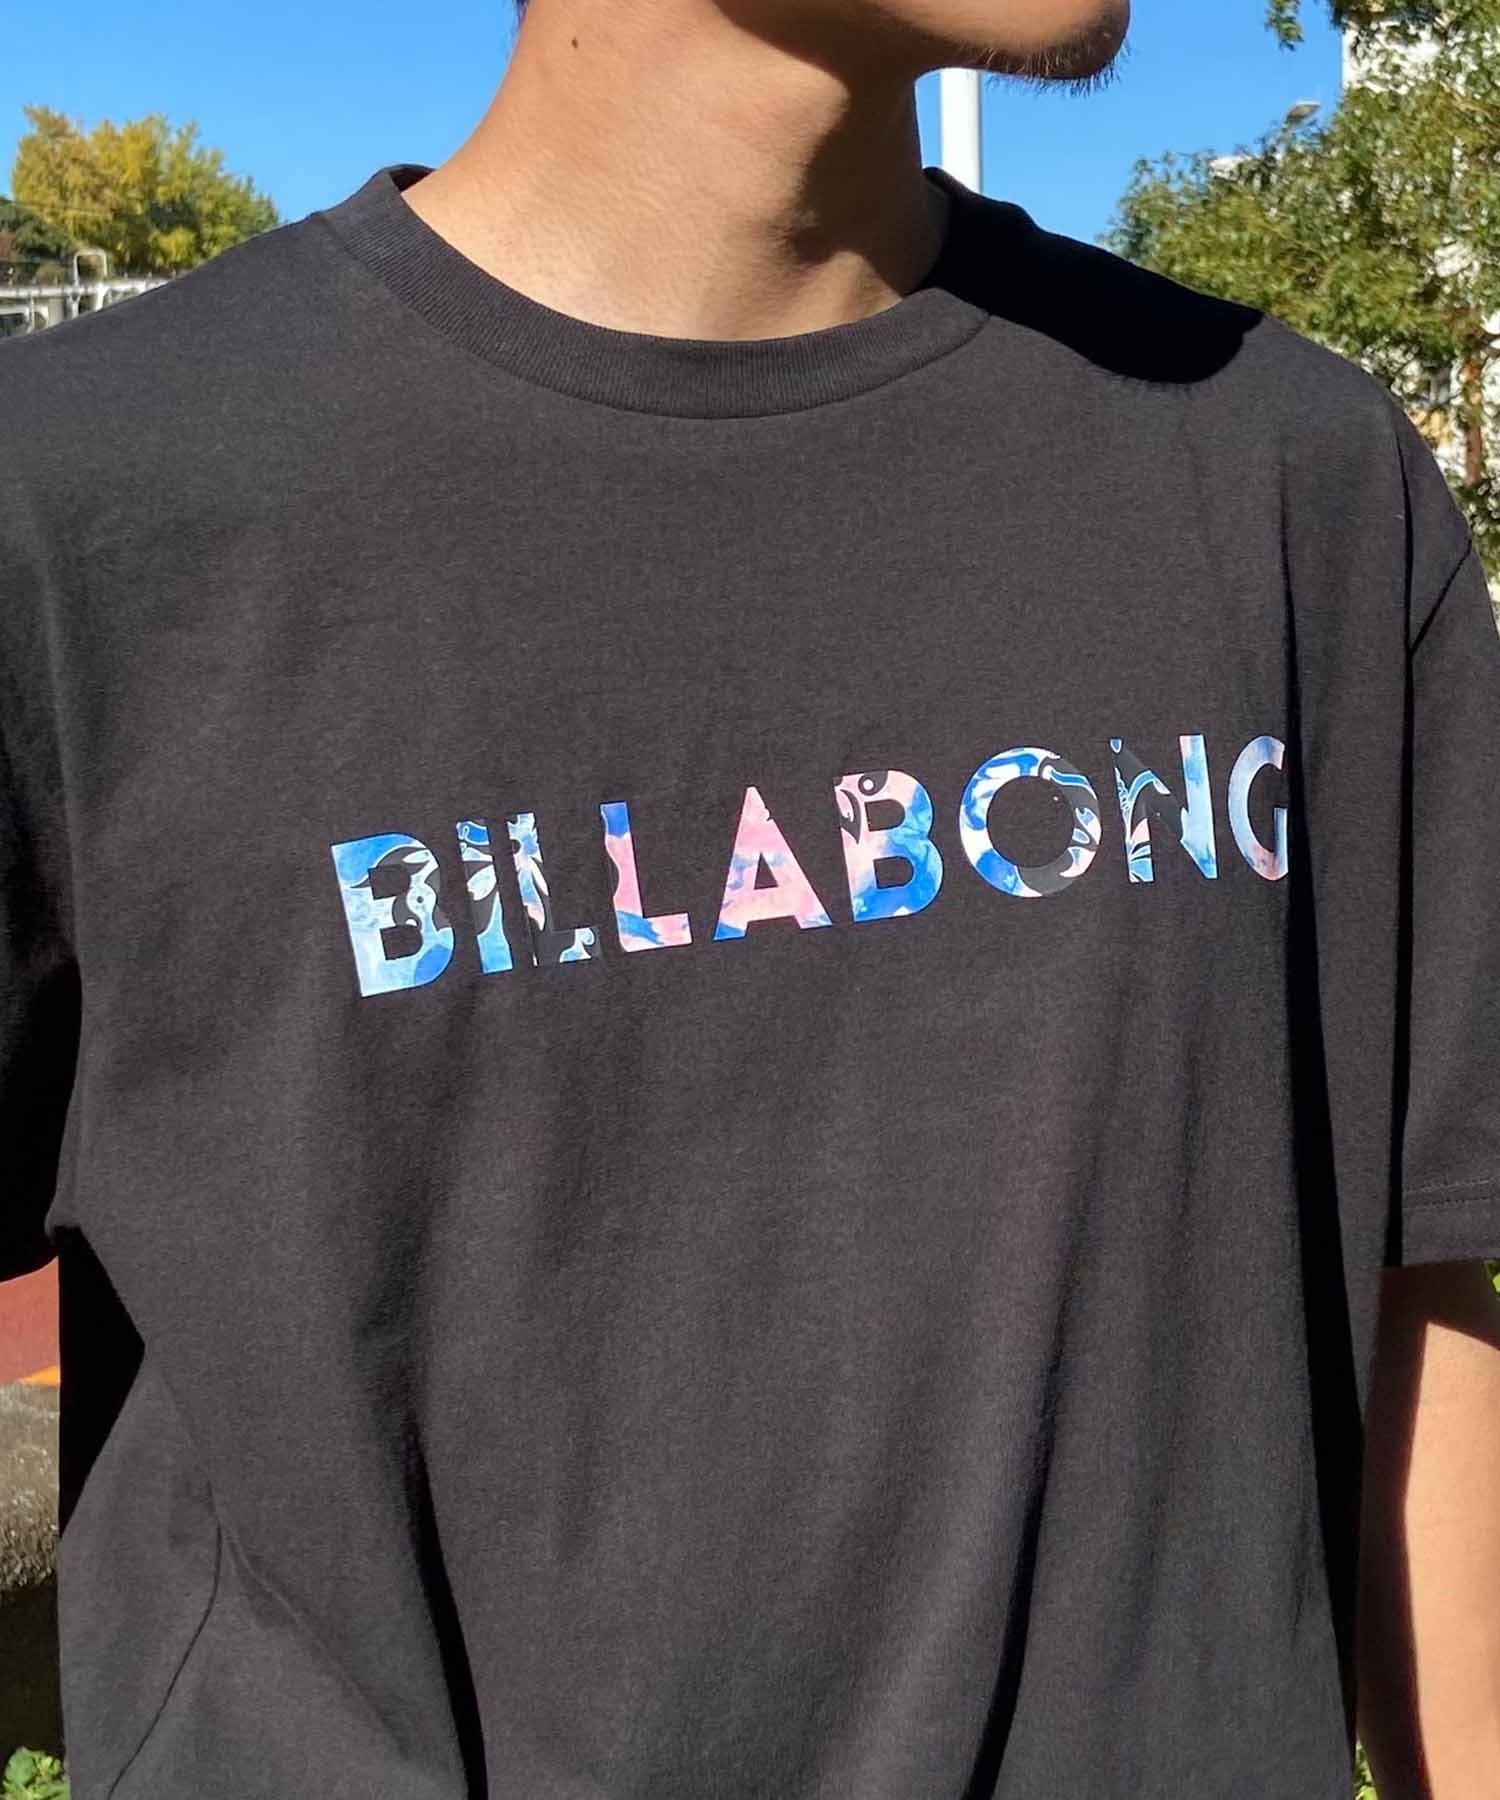 BILLABONG ビラボン UNITY LOGO Tシャツ 半袖 メンズ ロゴ BE011-200(BLA-S)